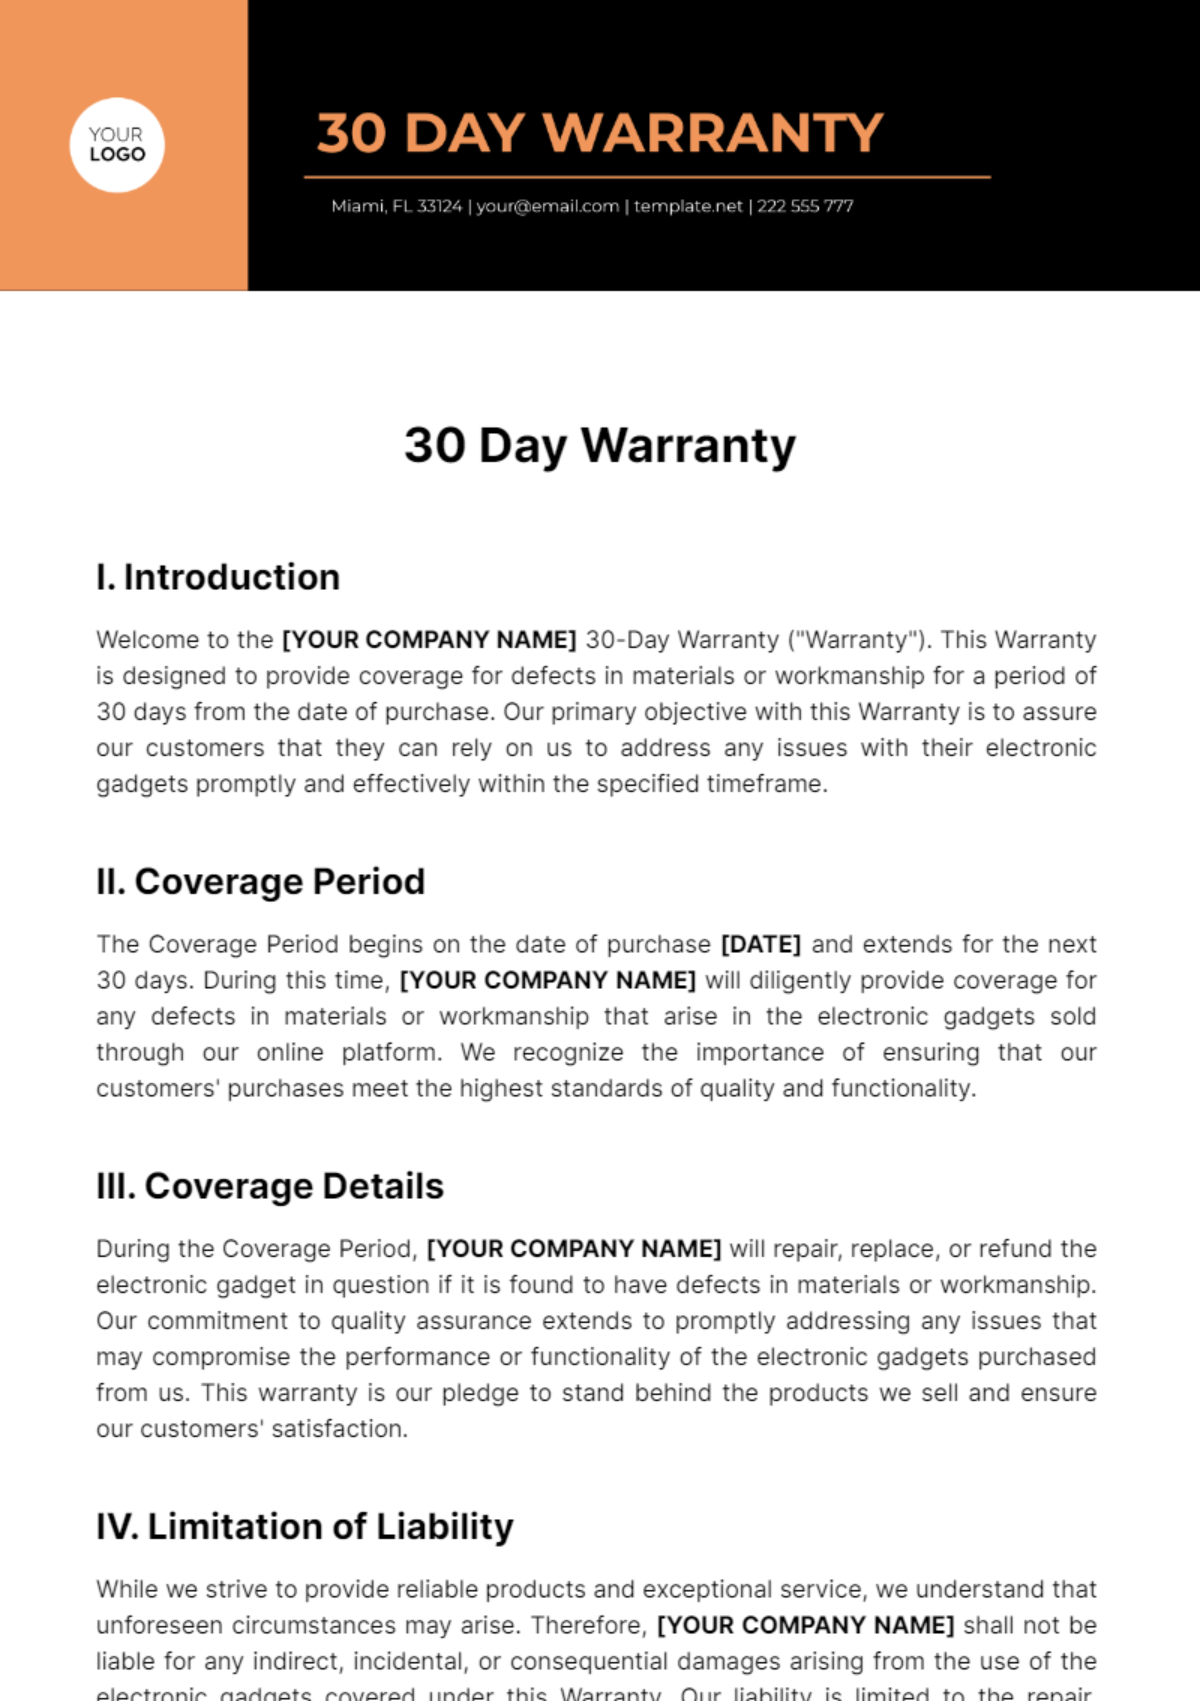 30 Day Warranty Template